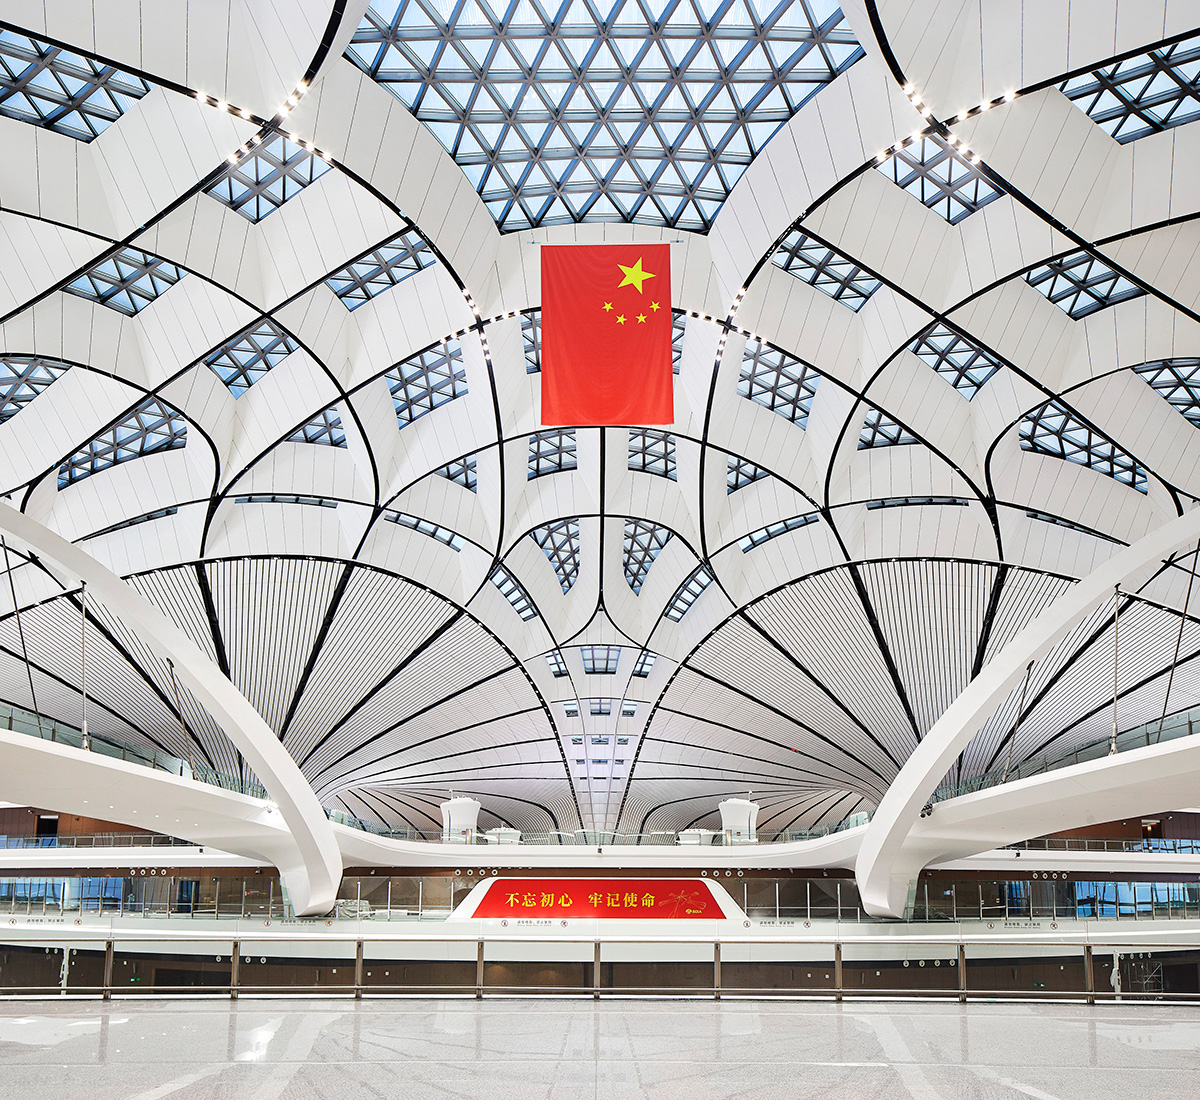 Interior of Zaha Hadid-designed airport - ceiling structure